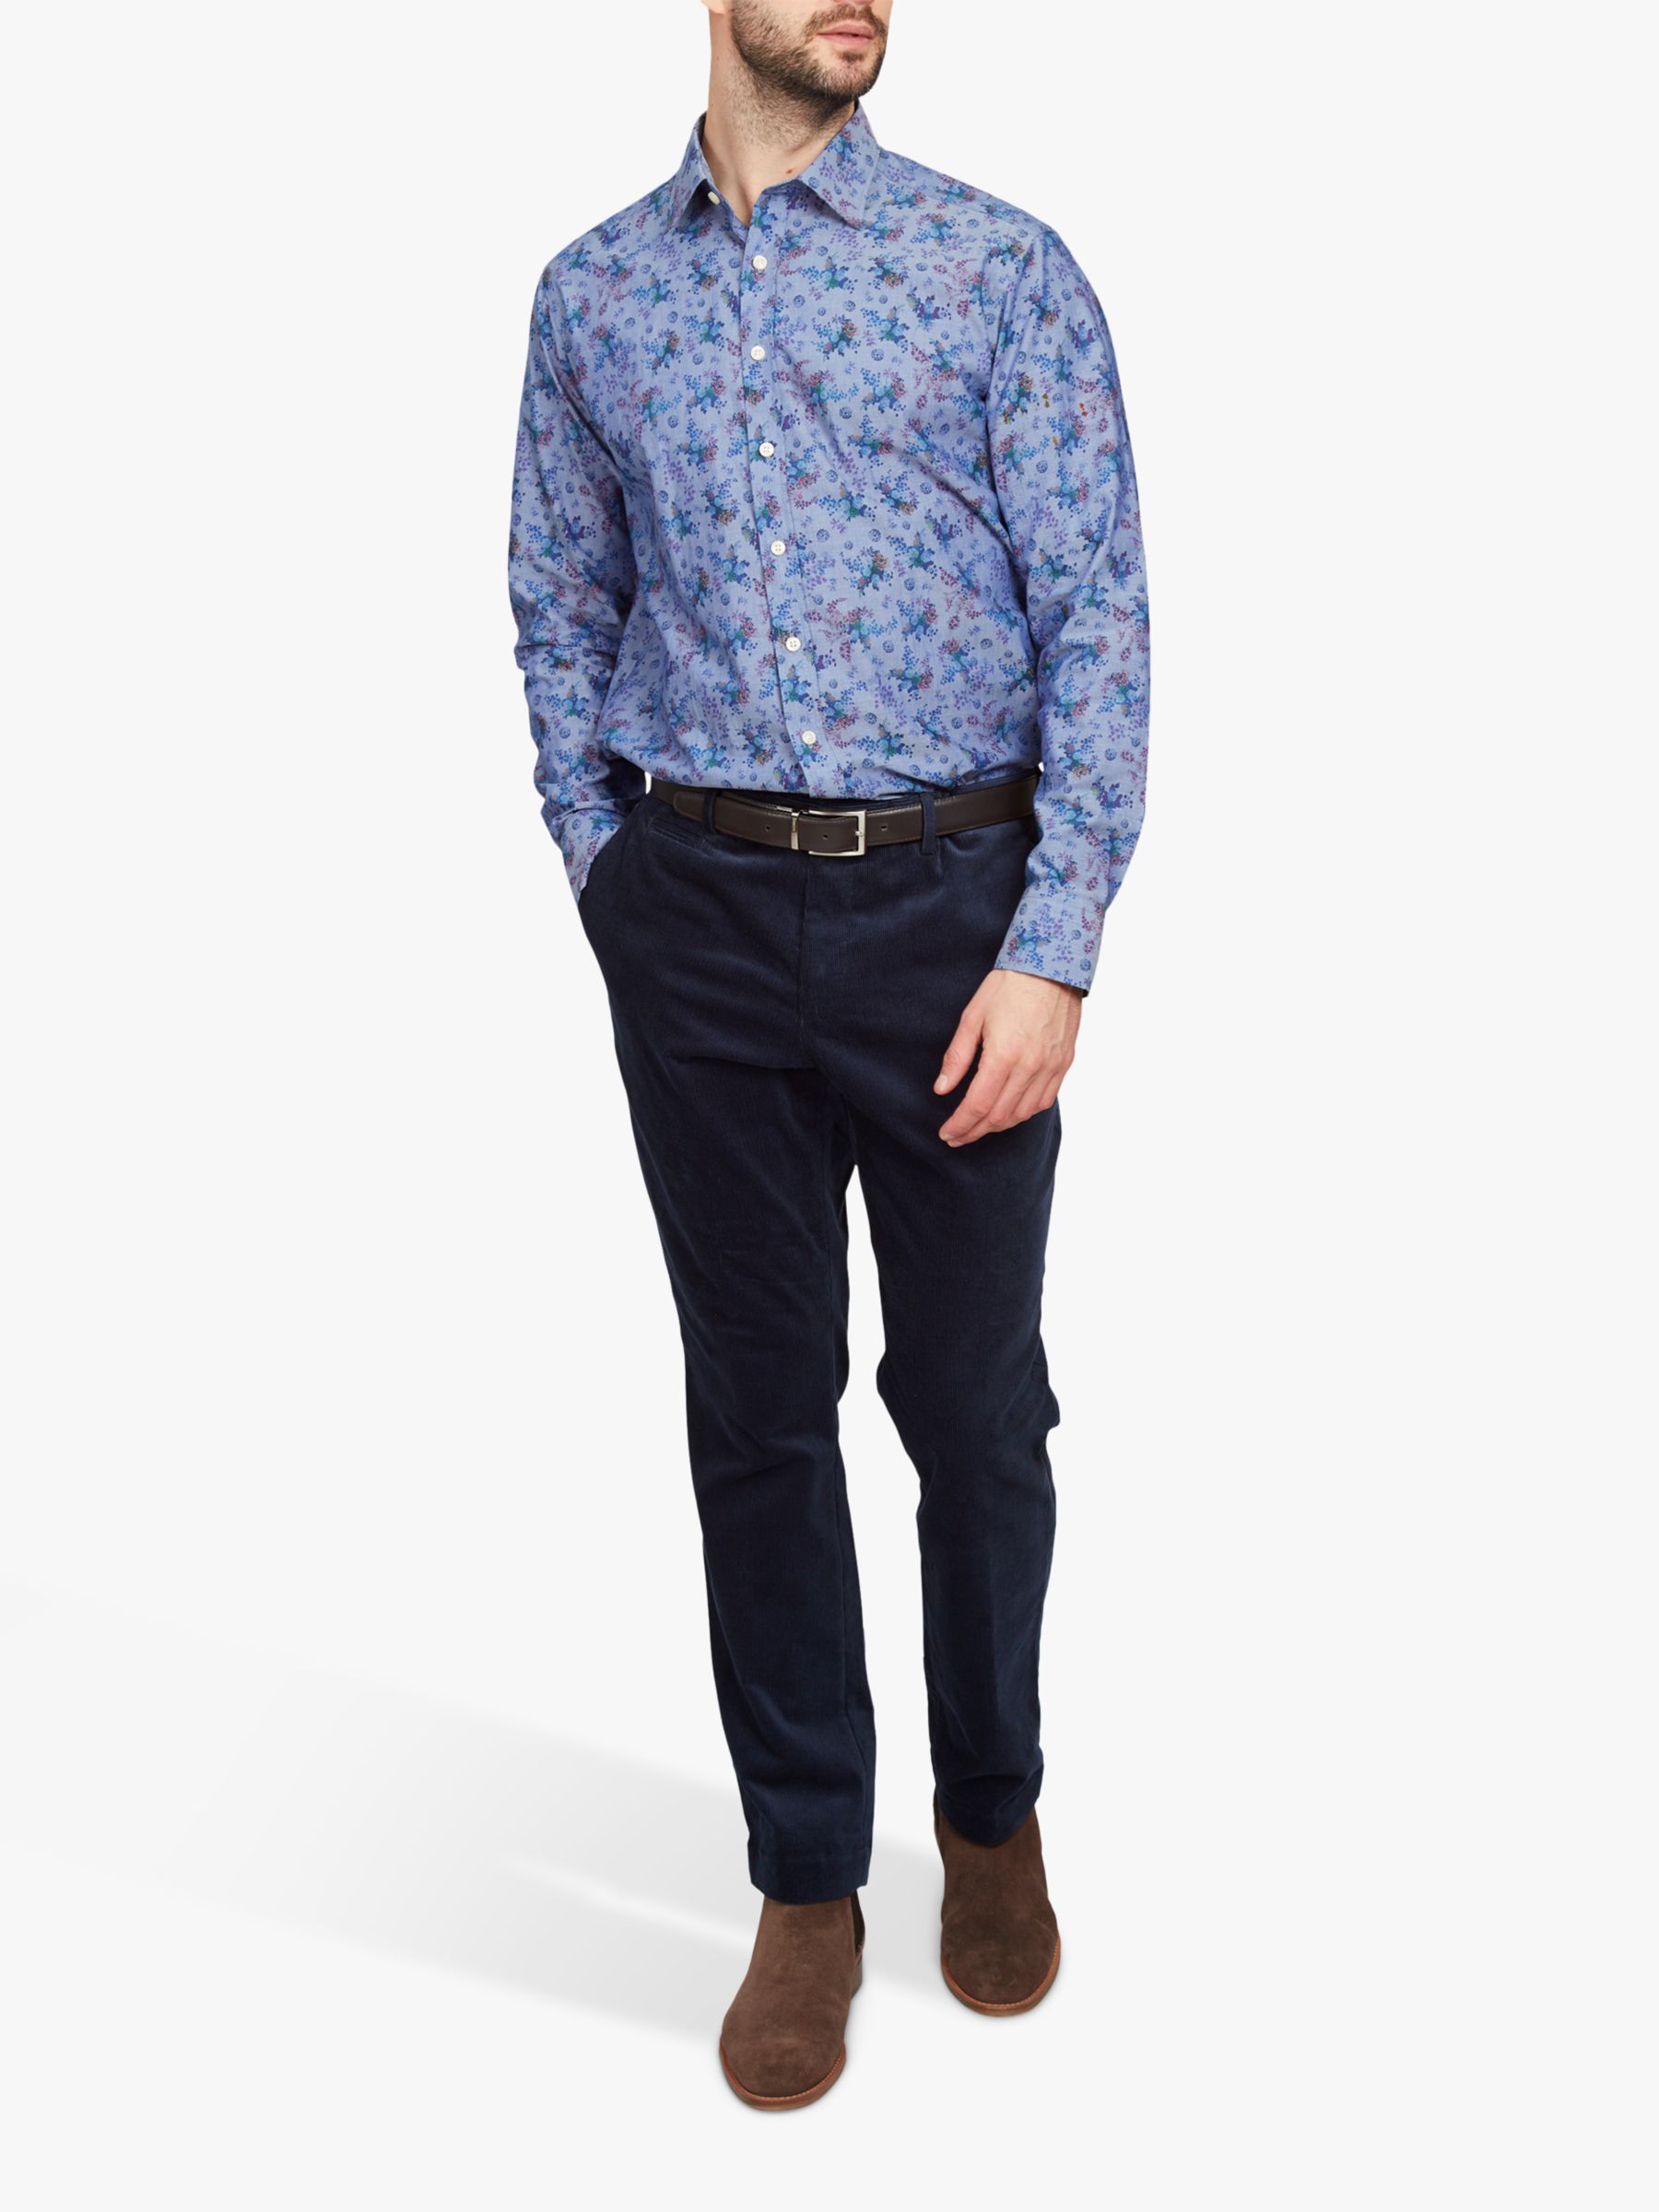 Simon Carter Chambray Floral Shirt, Blue/Multi, 15